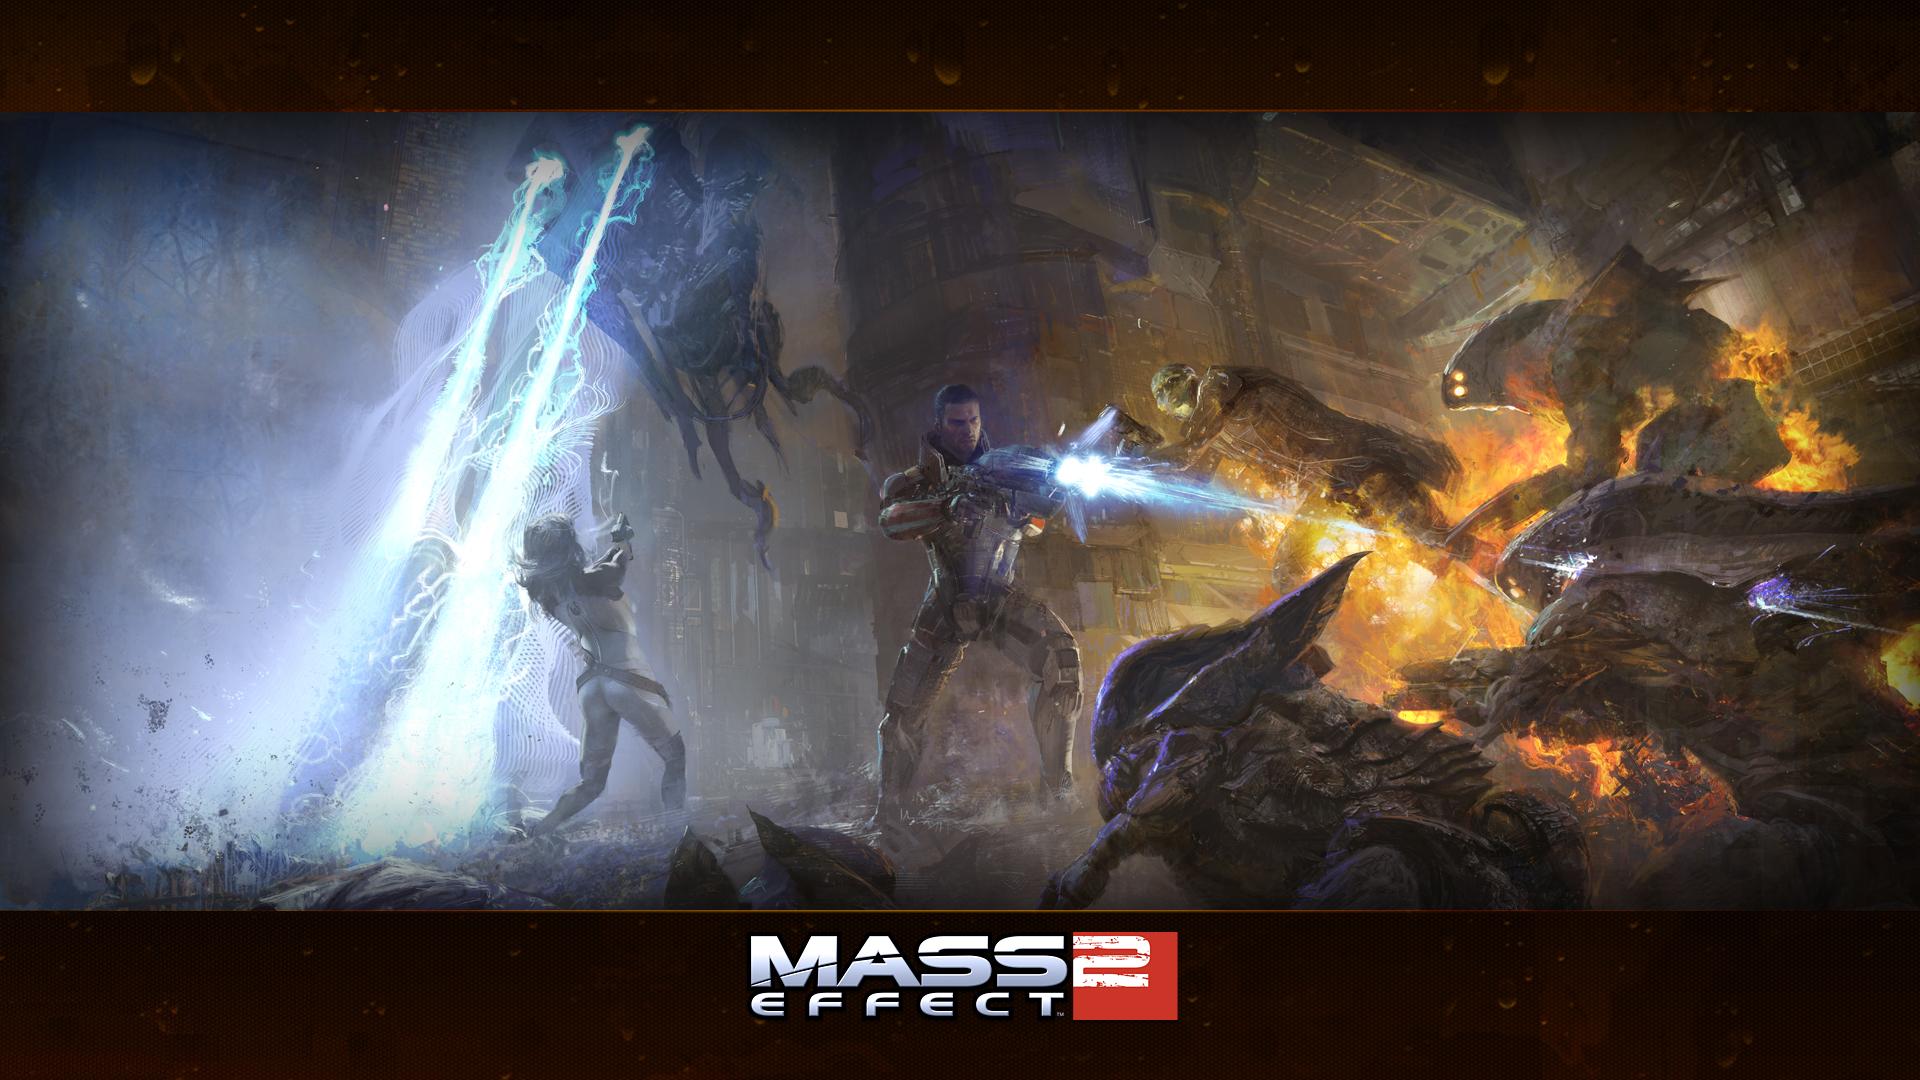 Mass Effect characters Commander Shepard and Miranda Lawson in HD desktop wallpaper.